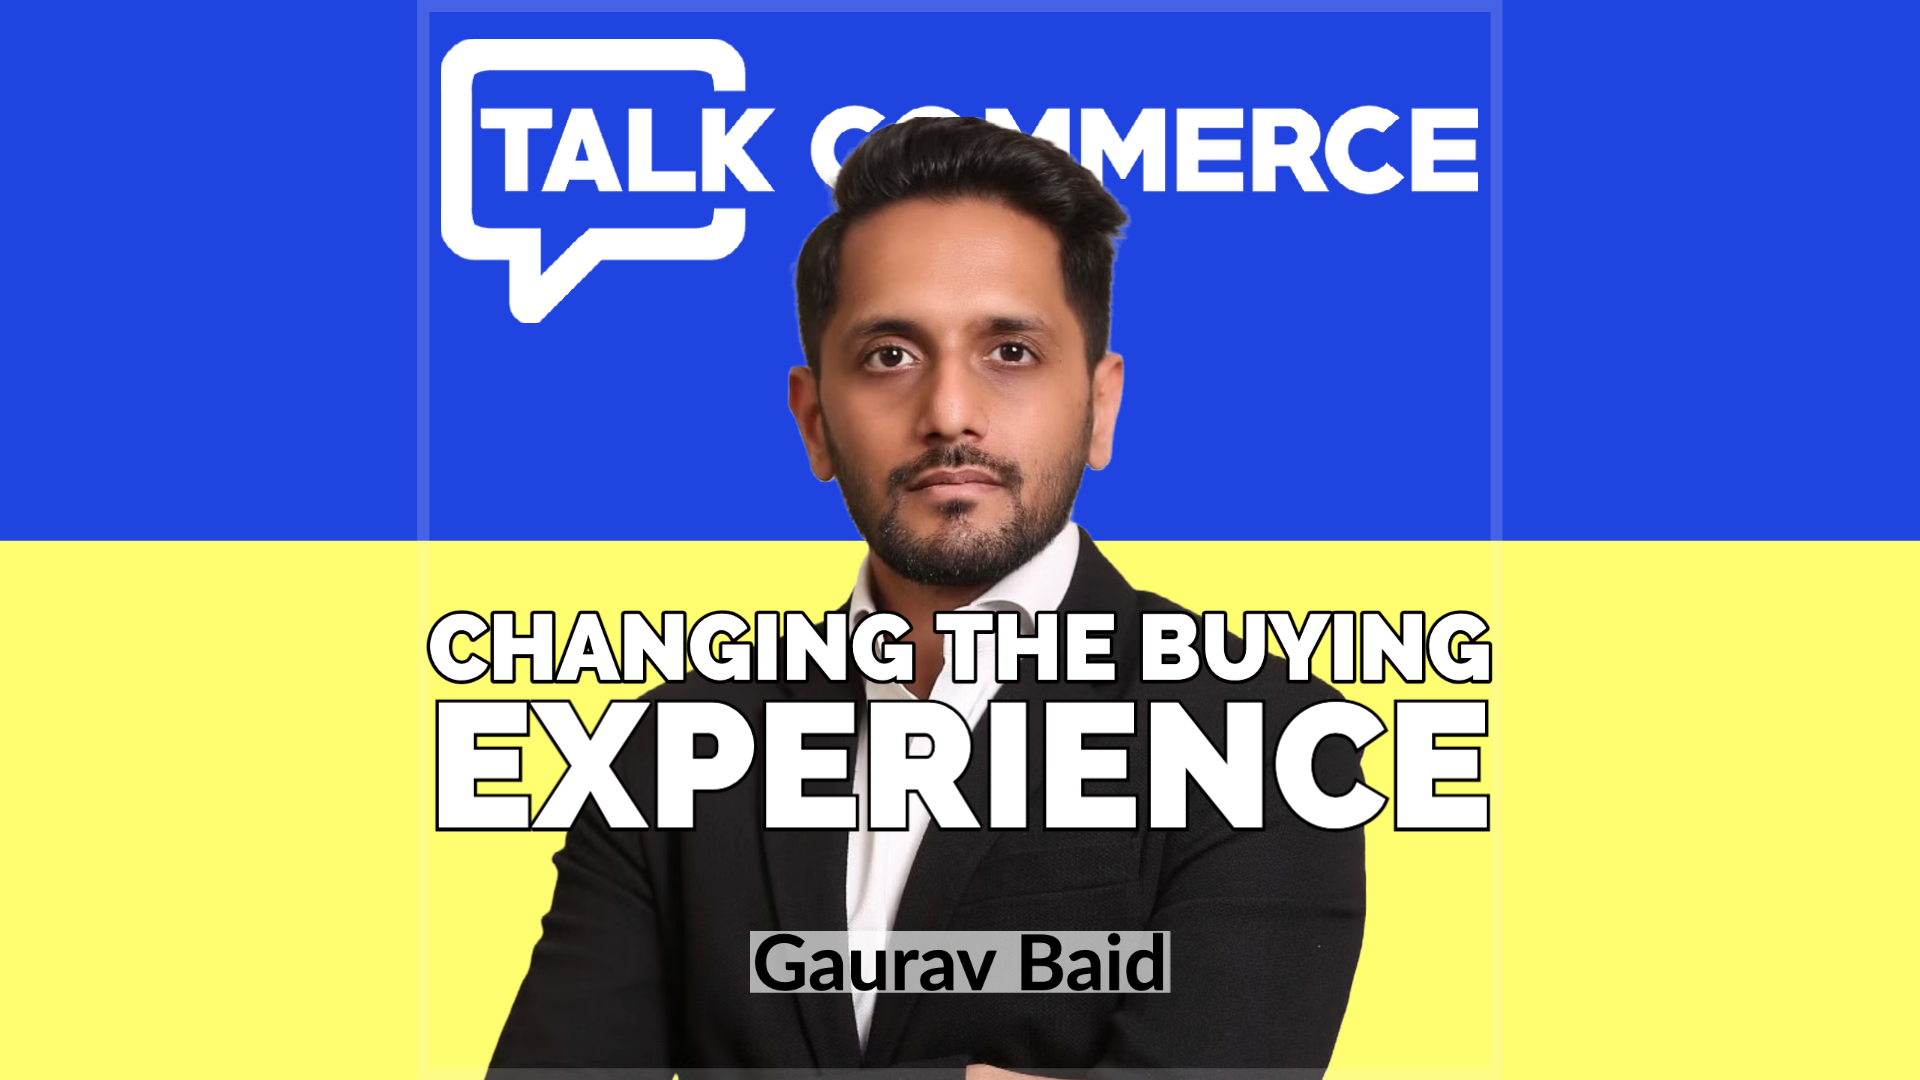 Talk-Commerce Gaurav Baid